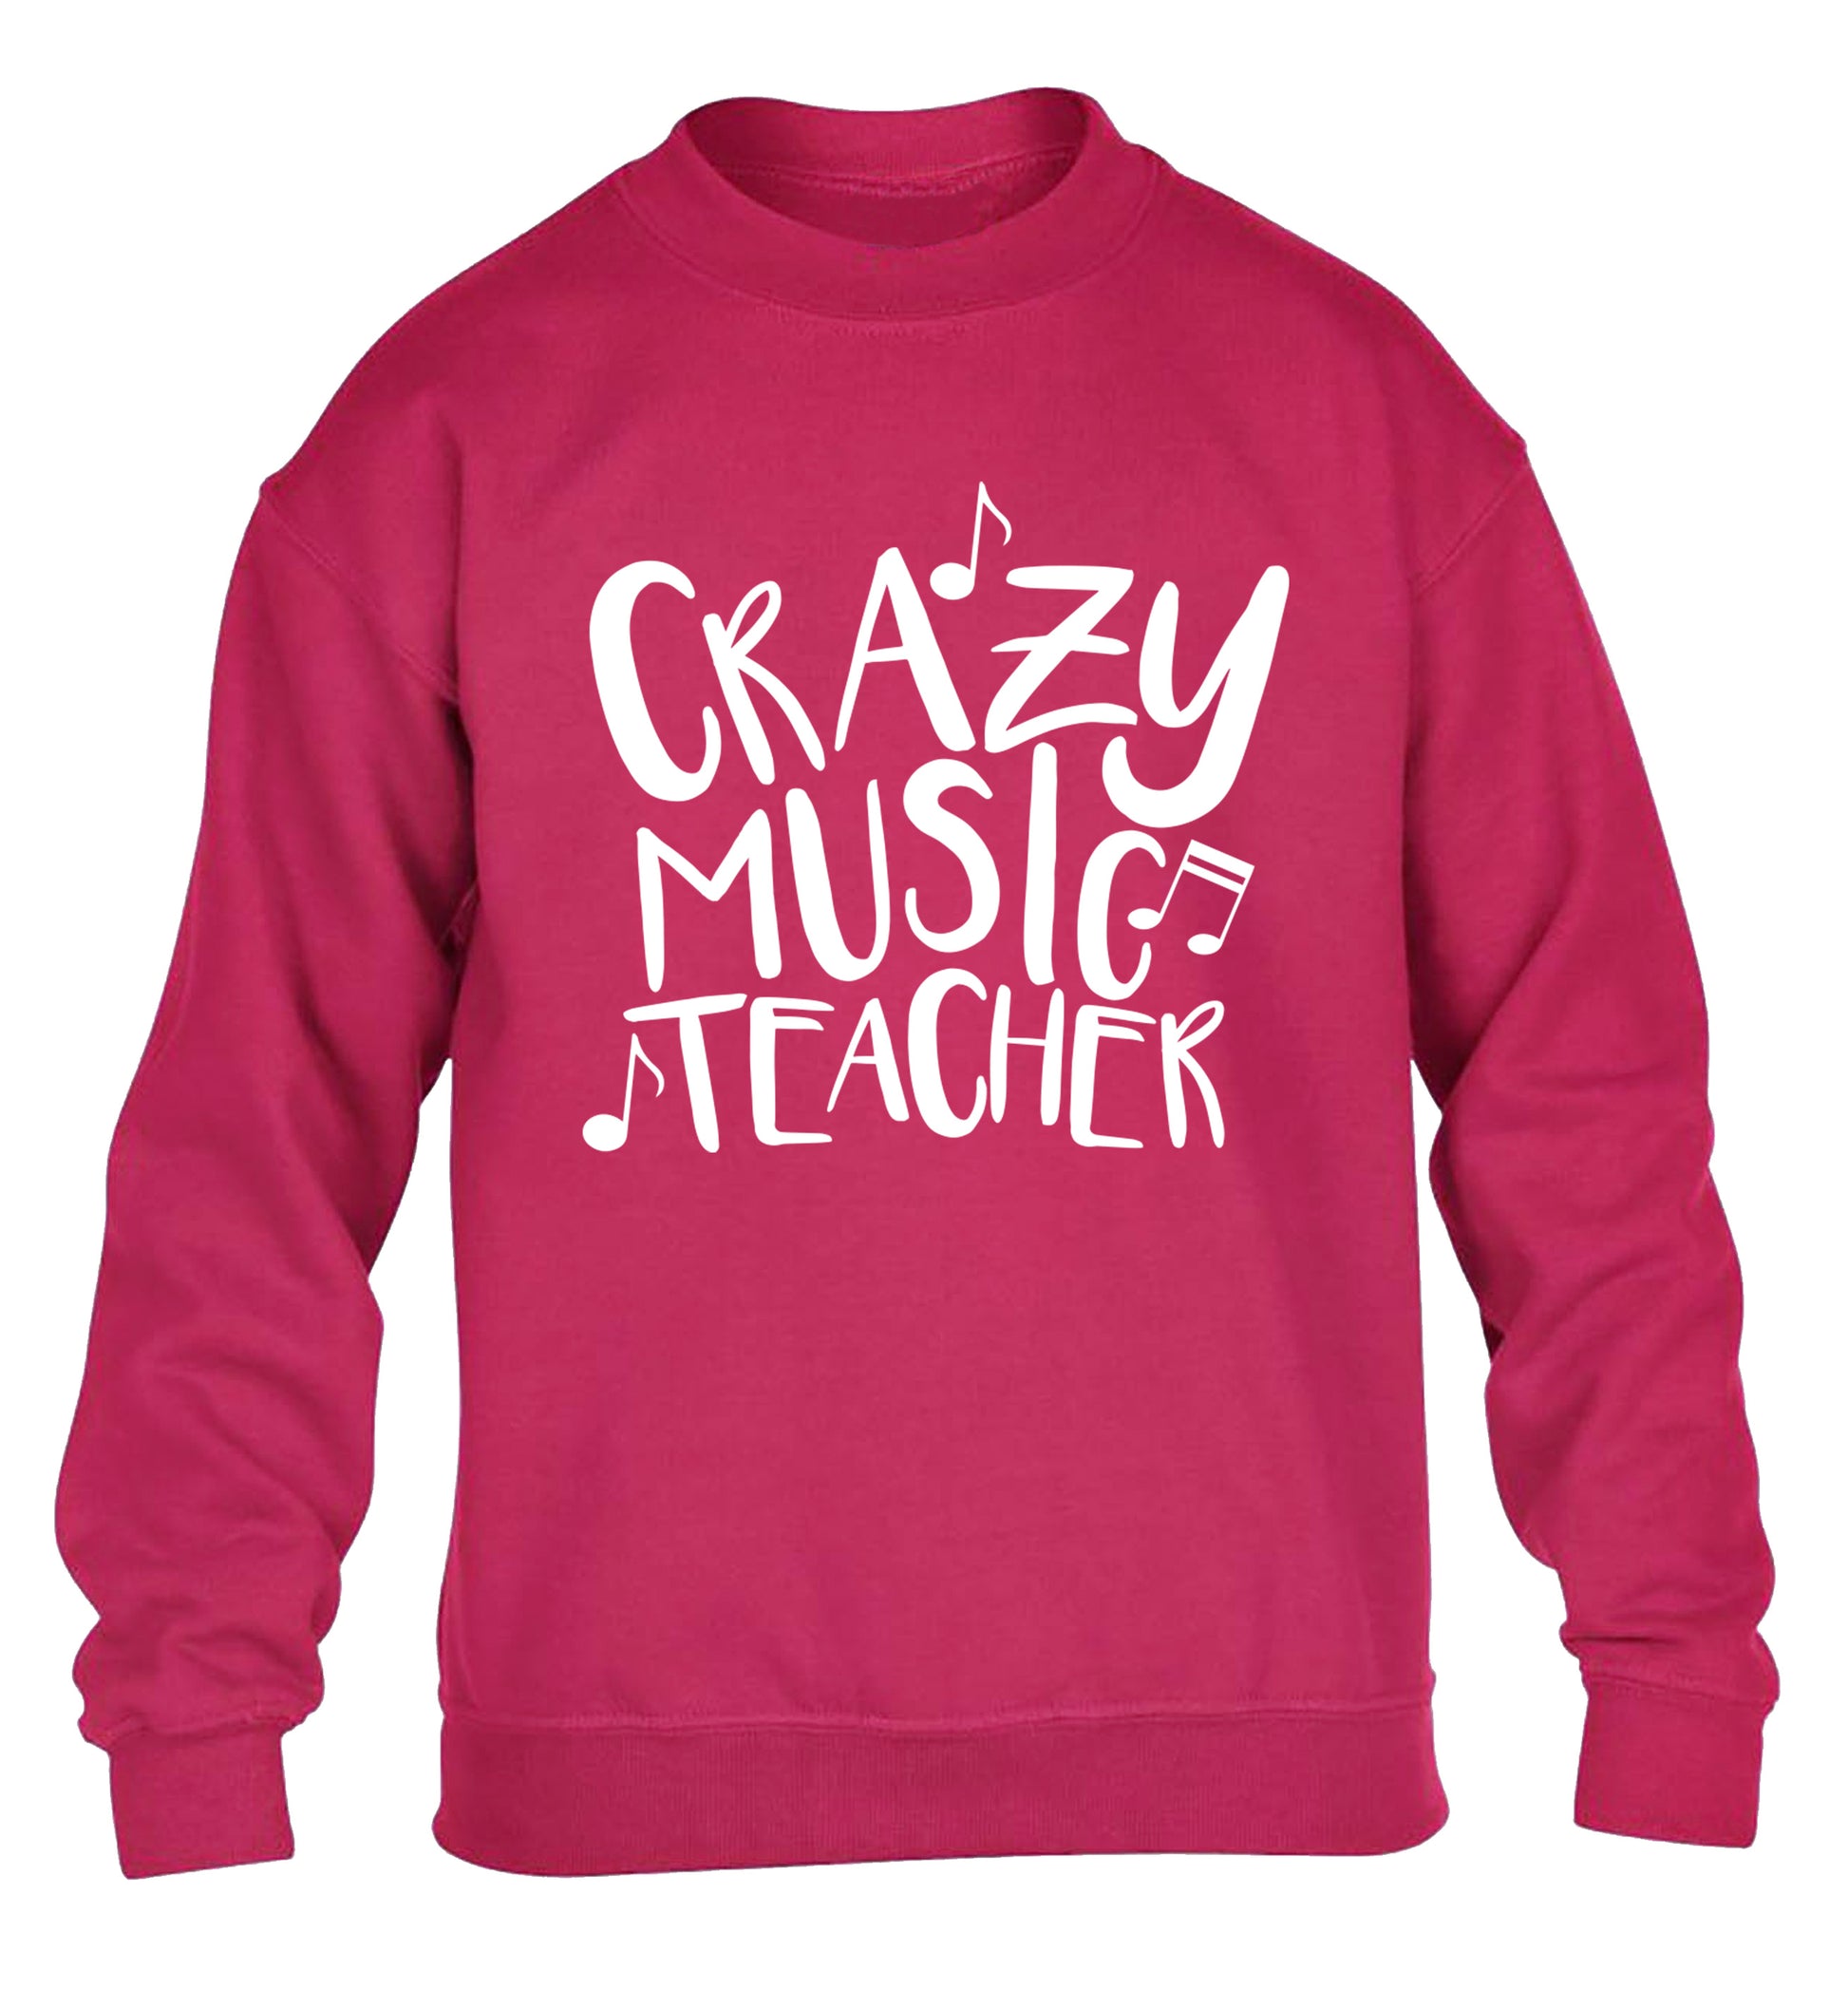 Crazy music teacher children's pink sweater 12-13 Years